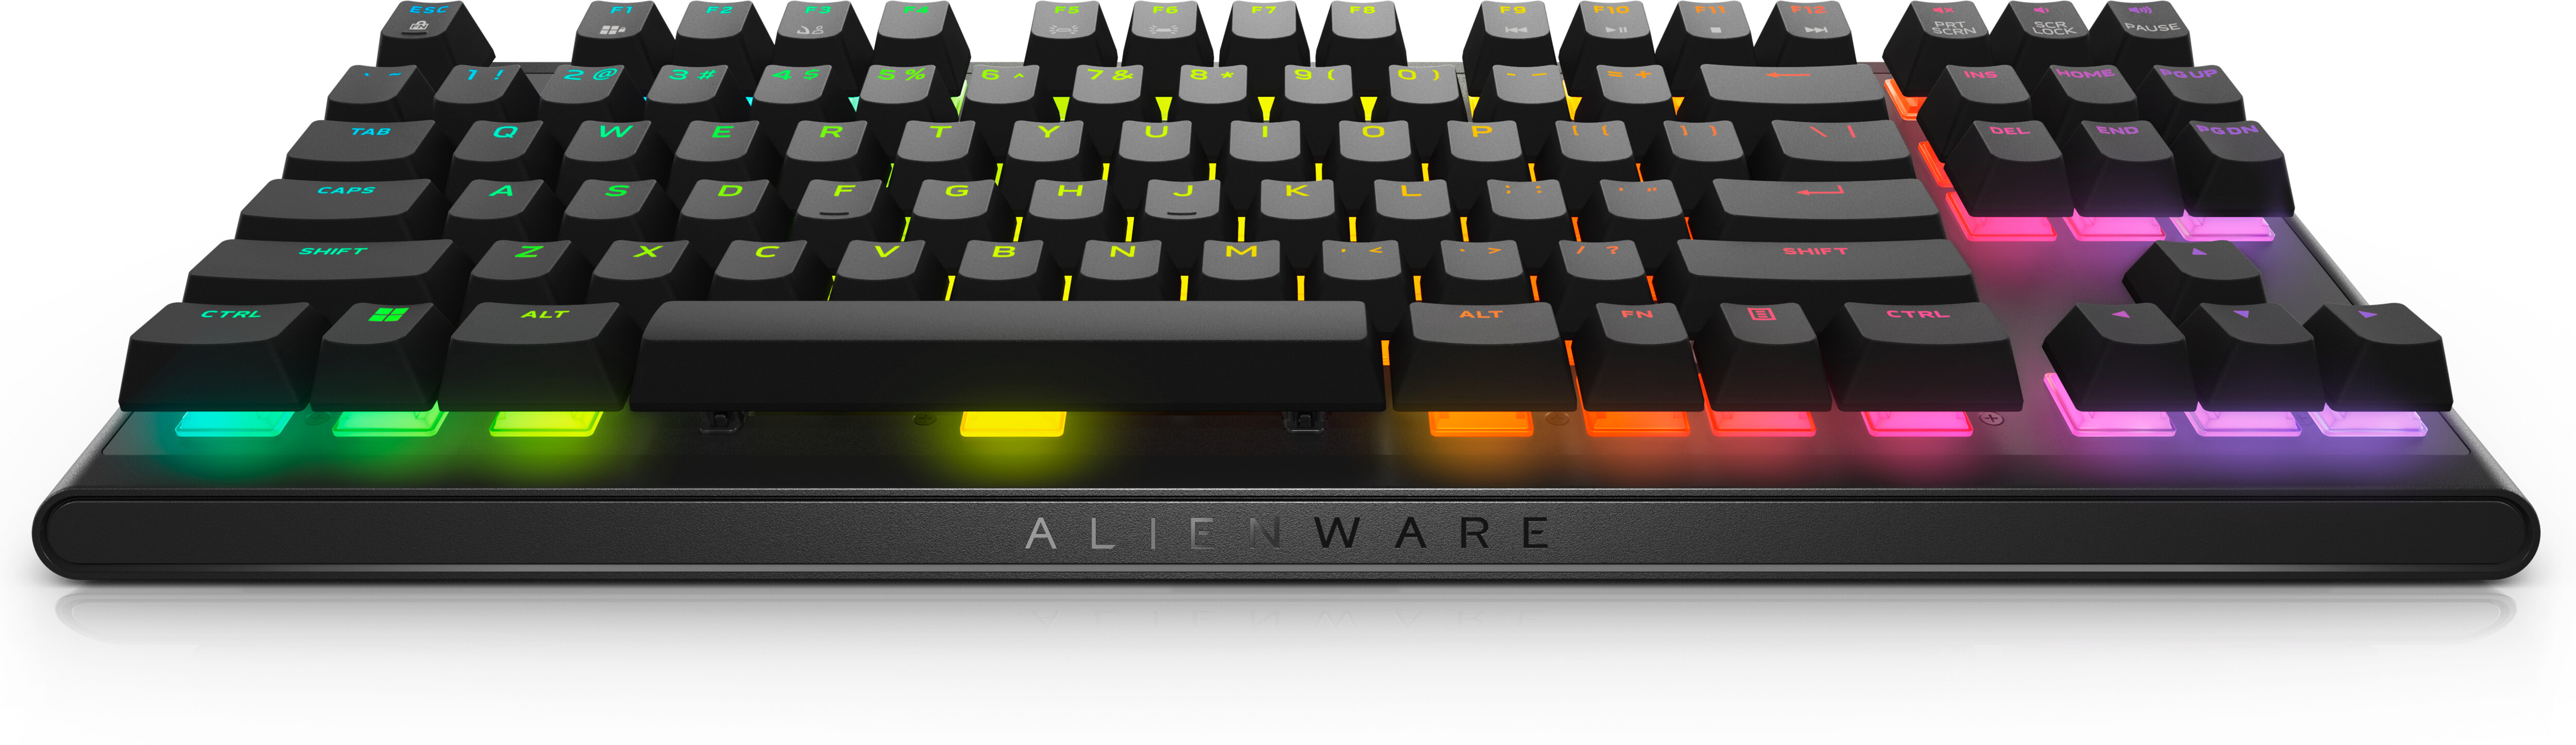 Alienwareテンキーレス ゲーミング キーボード(AW420K 